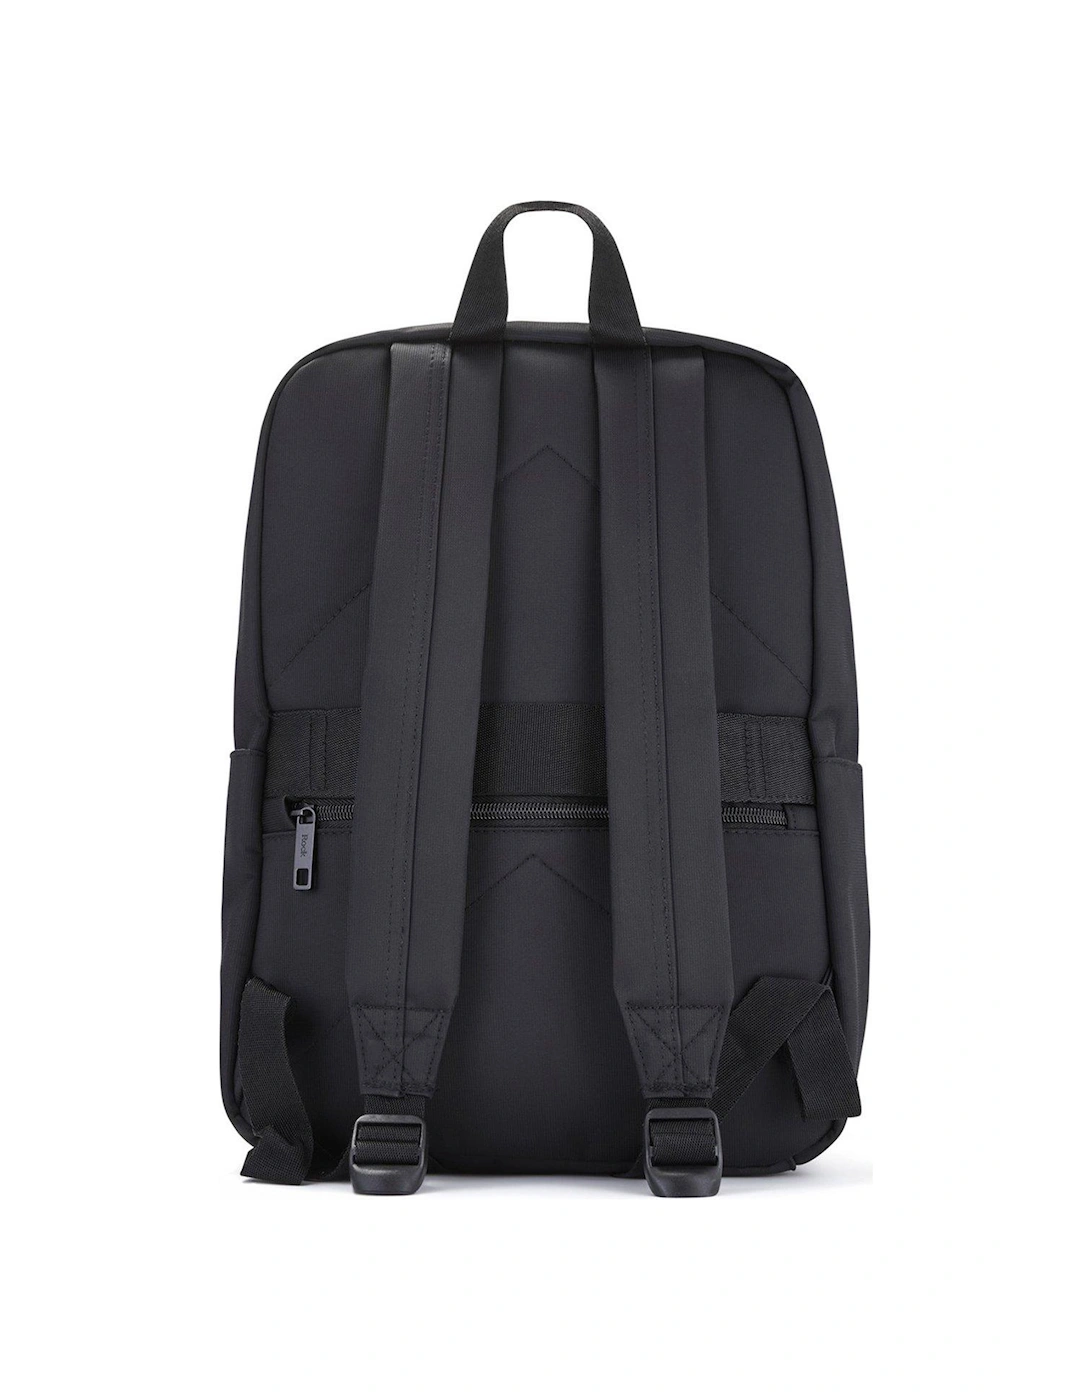 Platinum Lightweight On-Board Under Seat Compliant Backpack - Black